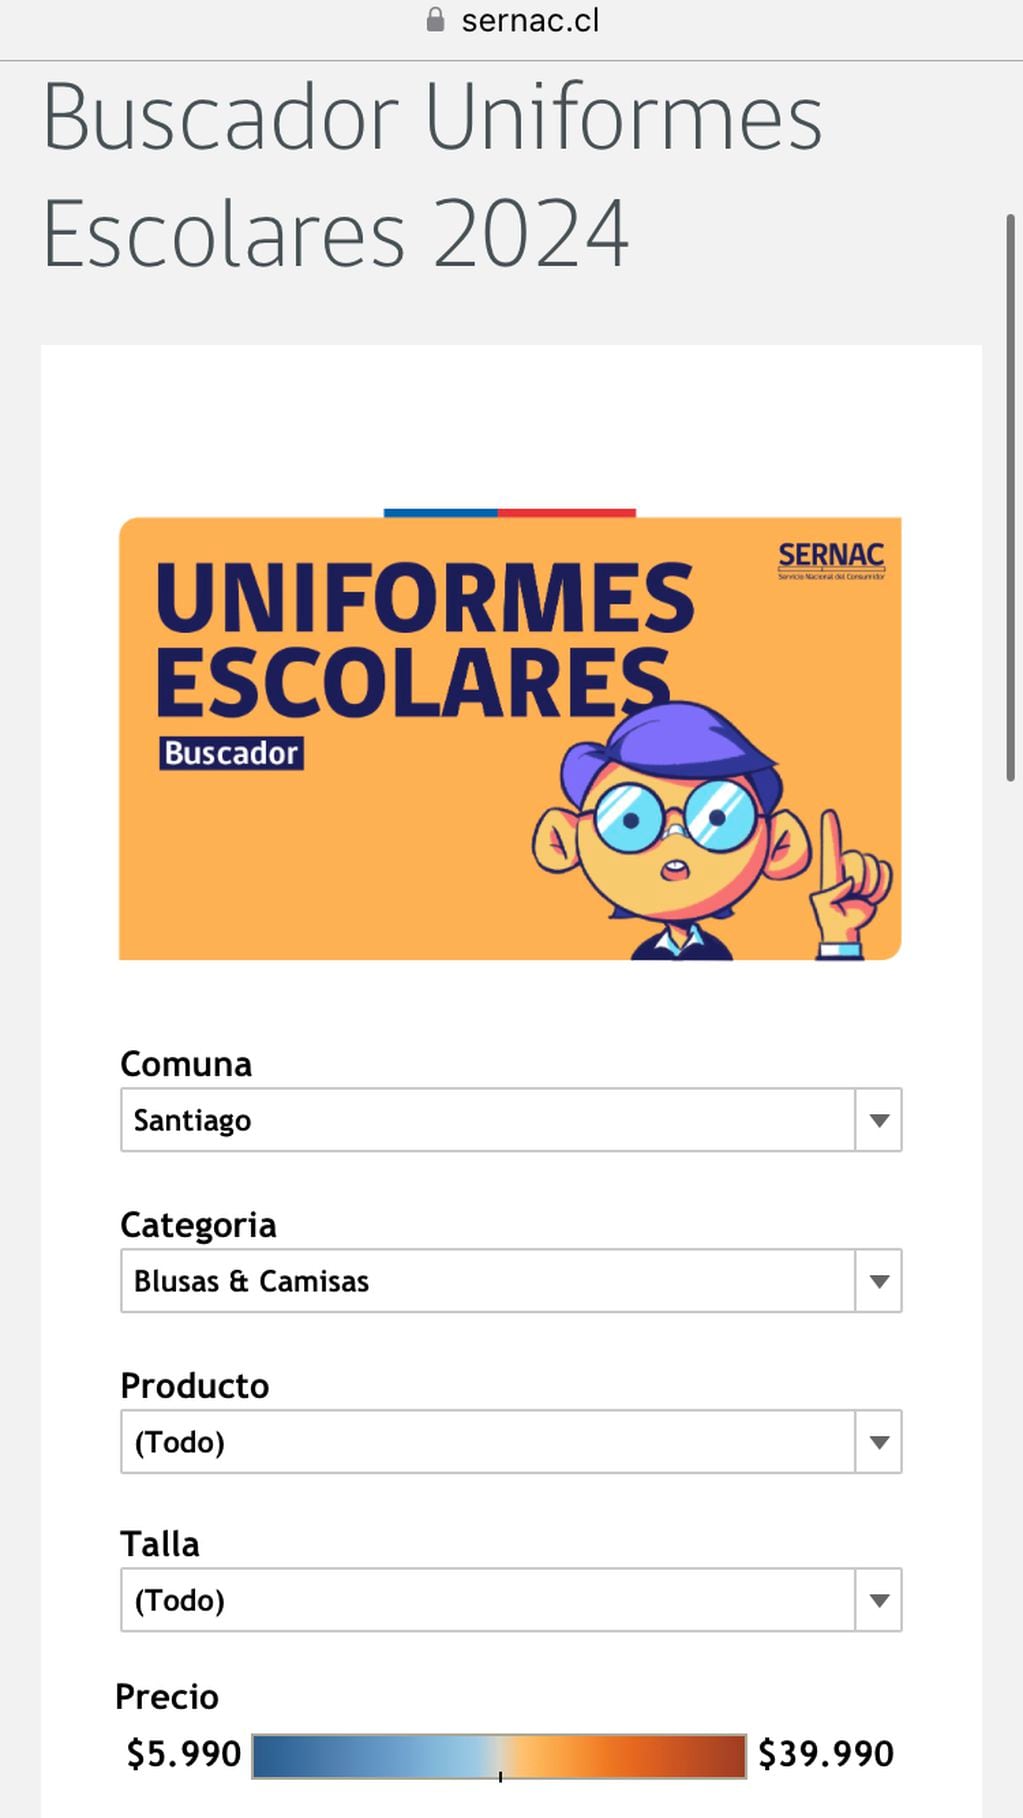 Buscador uniformes escolares Sernac.